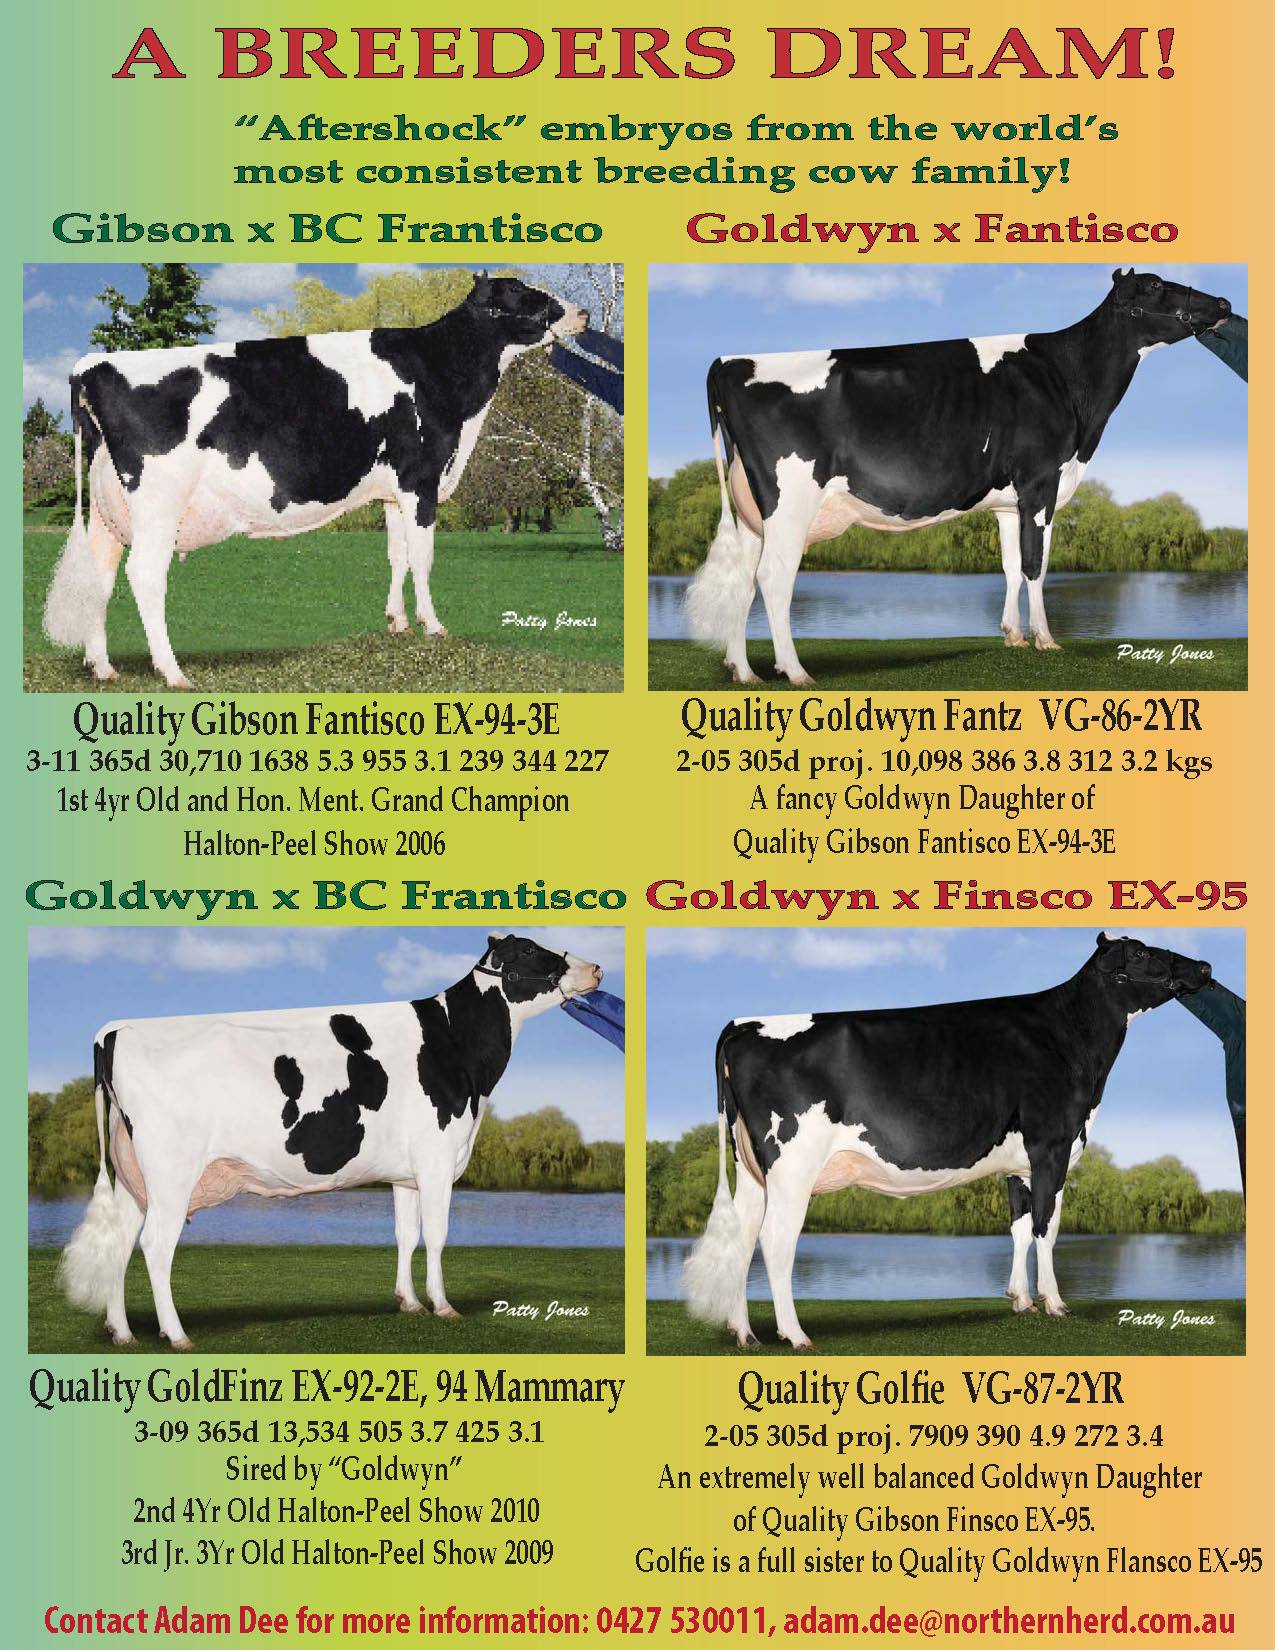 Quality Bolton Fiscon VG-89-2nd calf